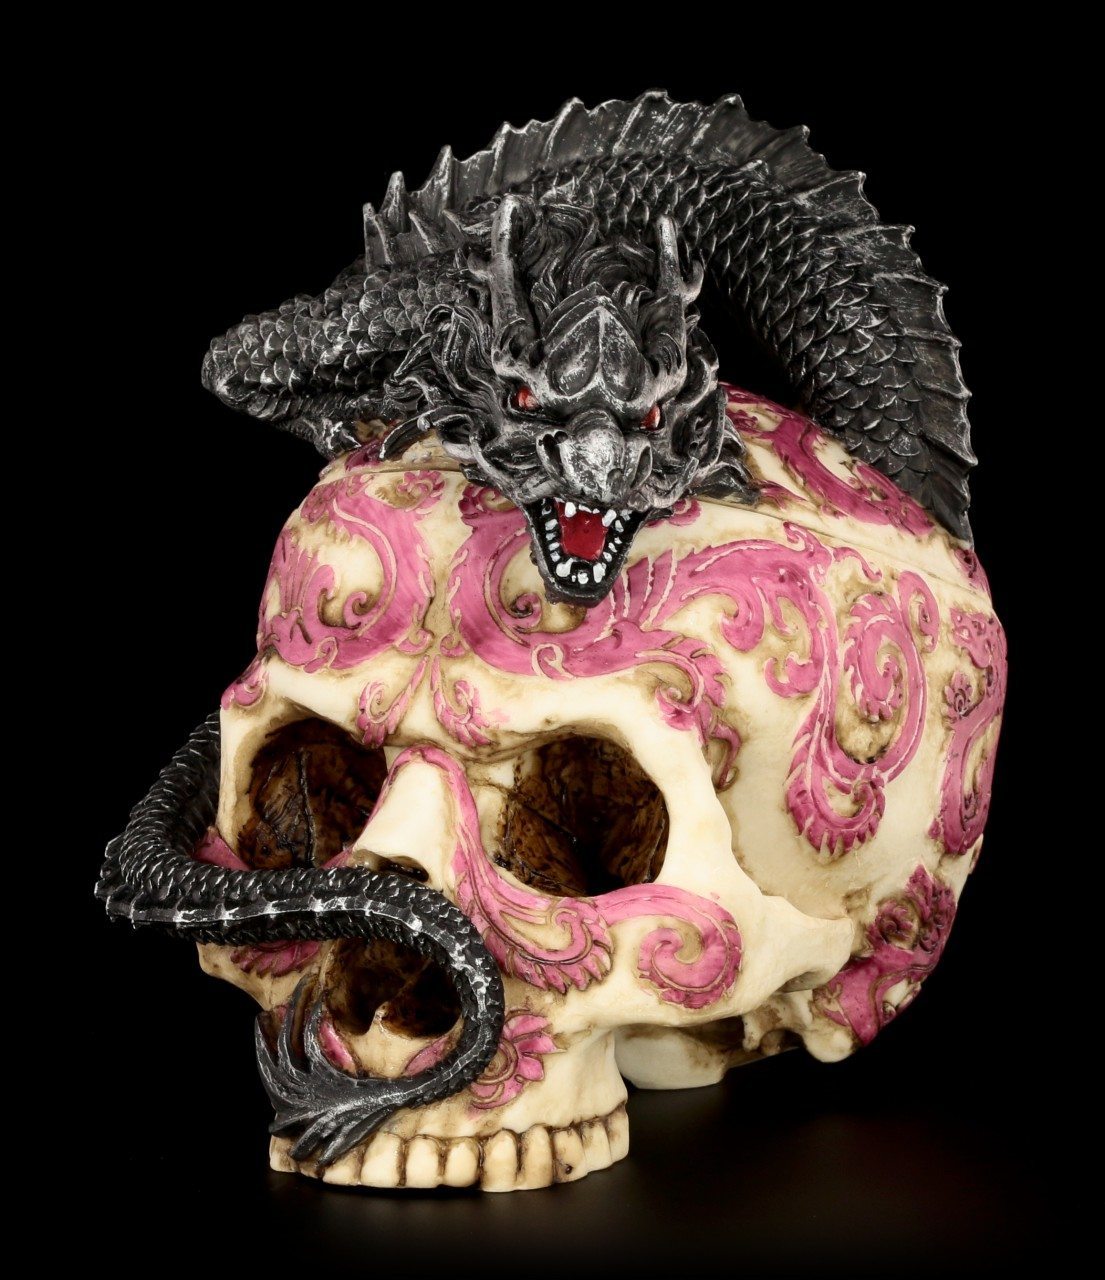 Totenkopf Schatulle - Eastern Dragon Skull by Anne Stokes